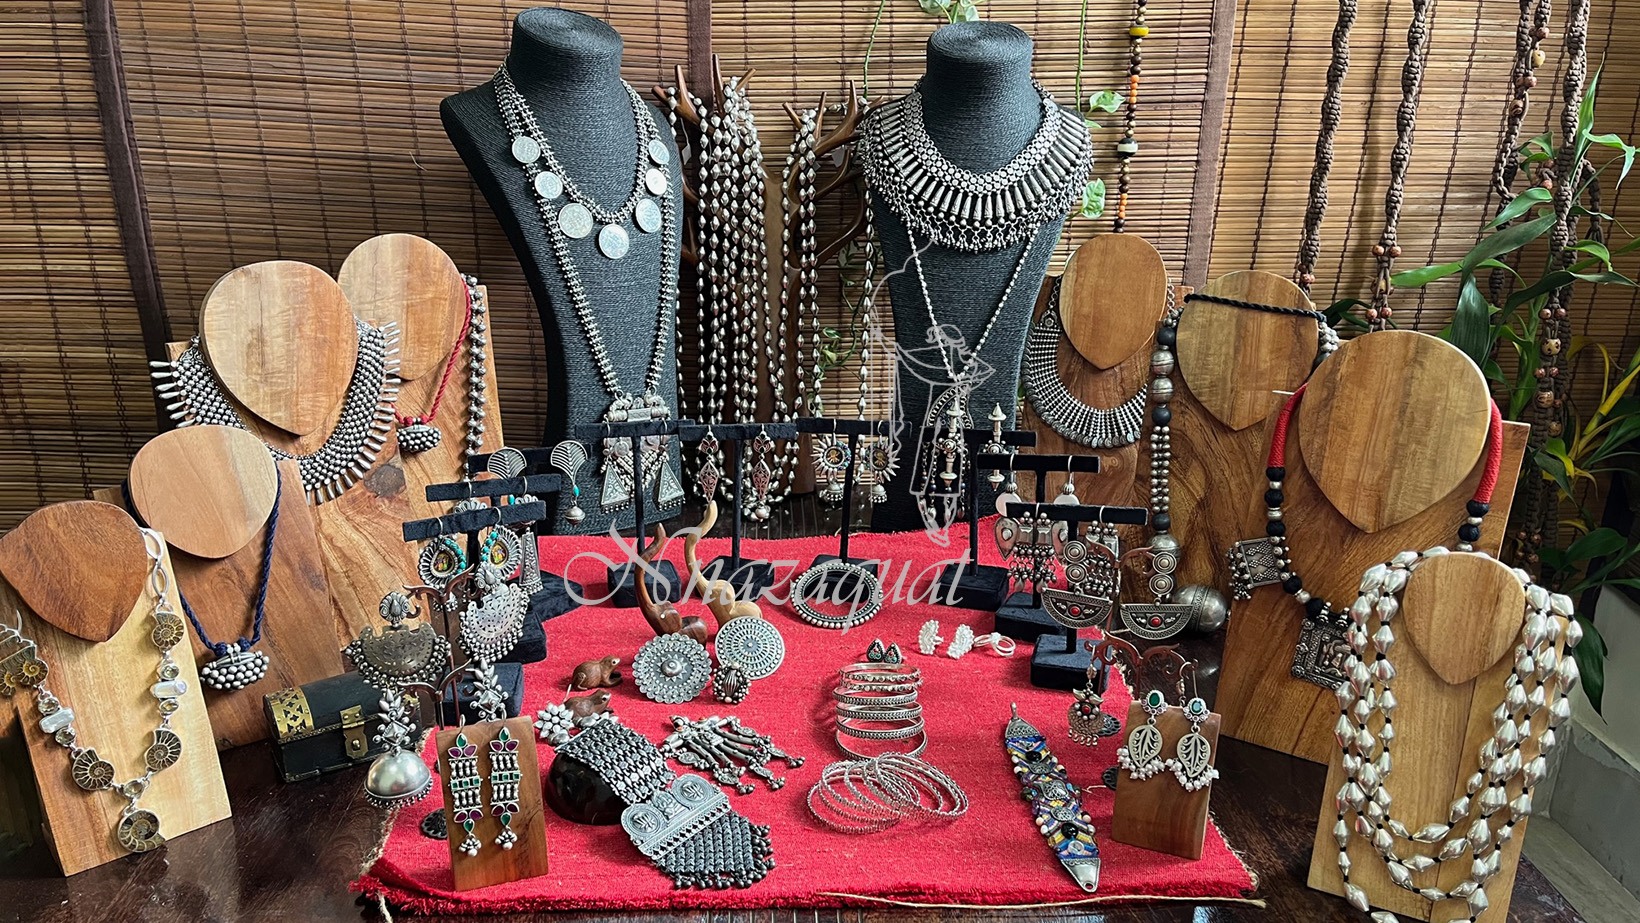 Nnazaquat – Bespoke Tribal and Silver Handcrafted Jewellery. Based in Goa